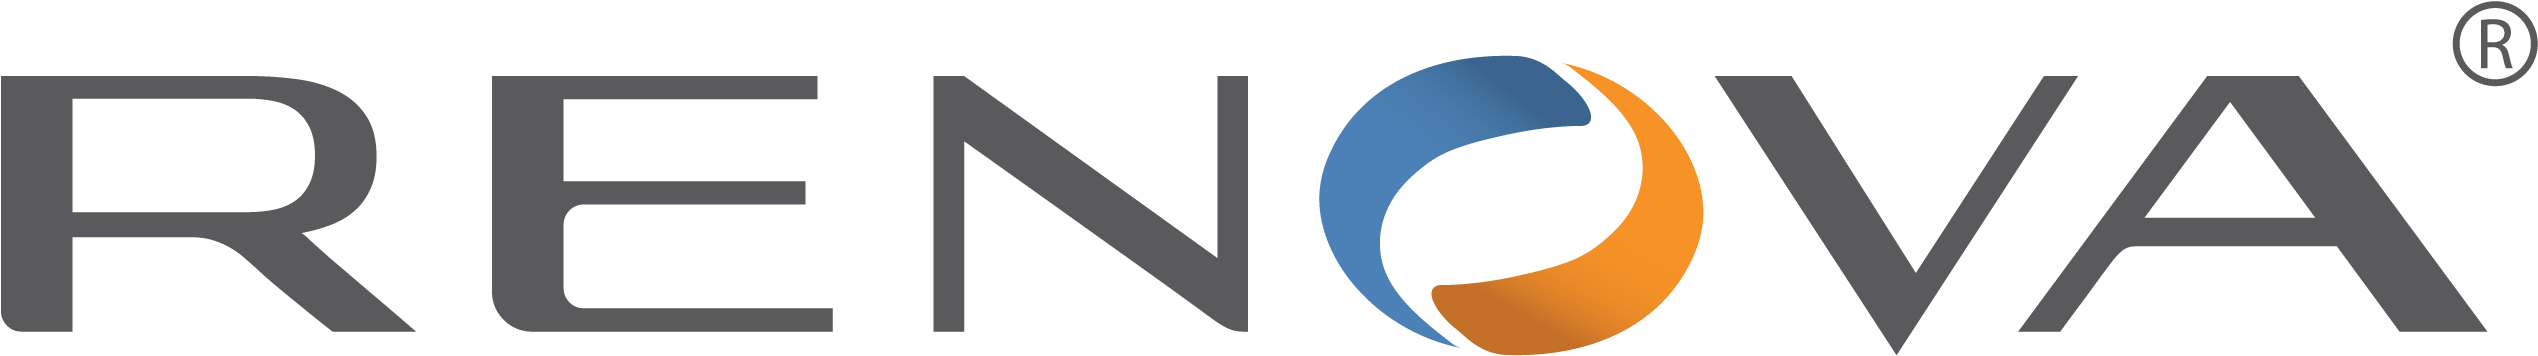 Rennova Health Inc - Renova Health Logo (2880x480)